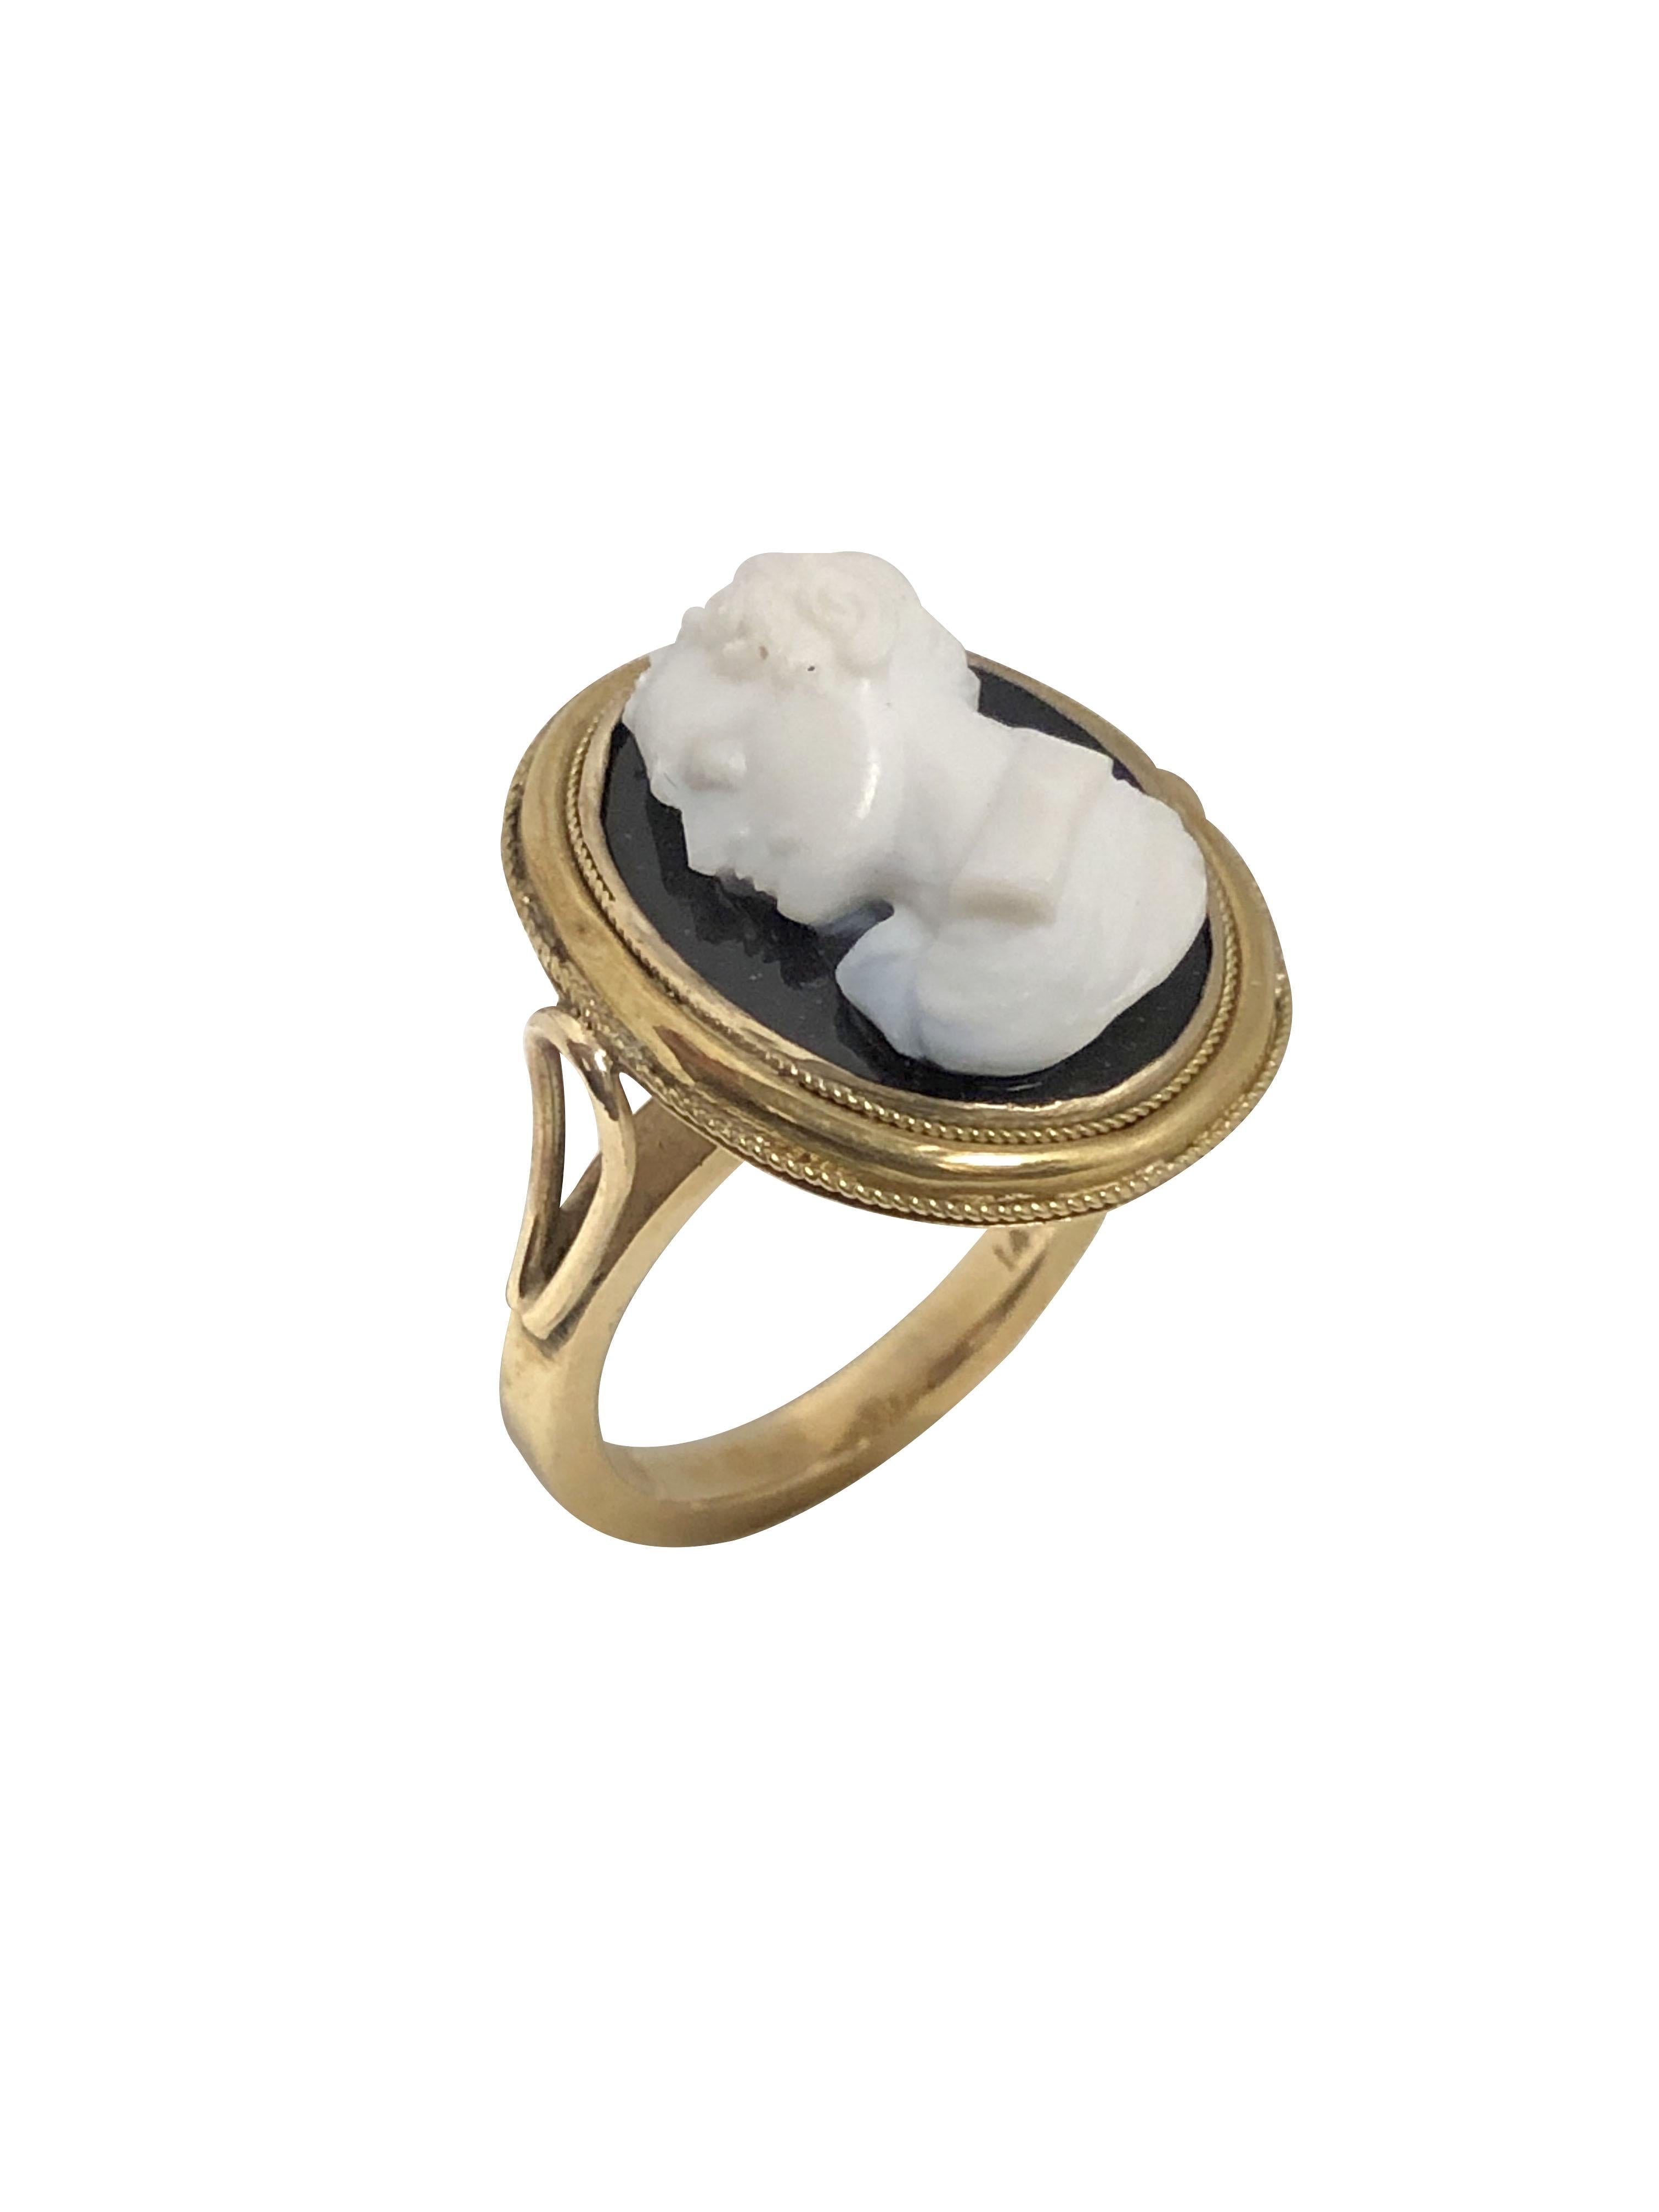 Oval Cut Antique Gold Hard Stone Intaglio Cameo Ring